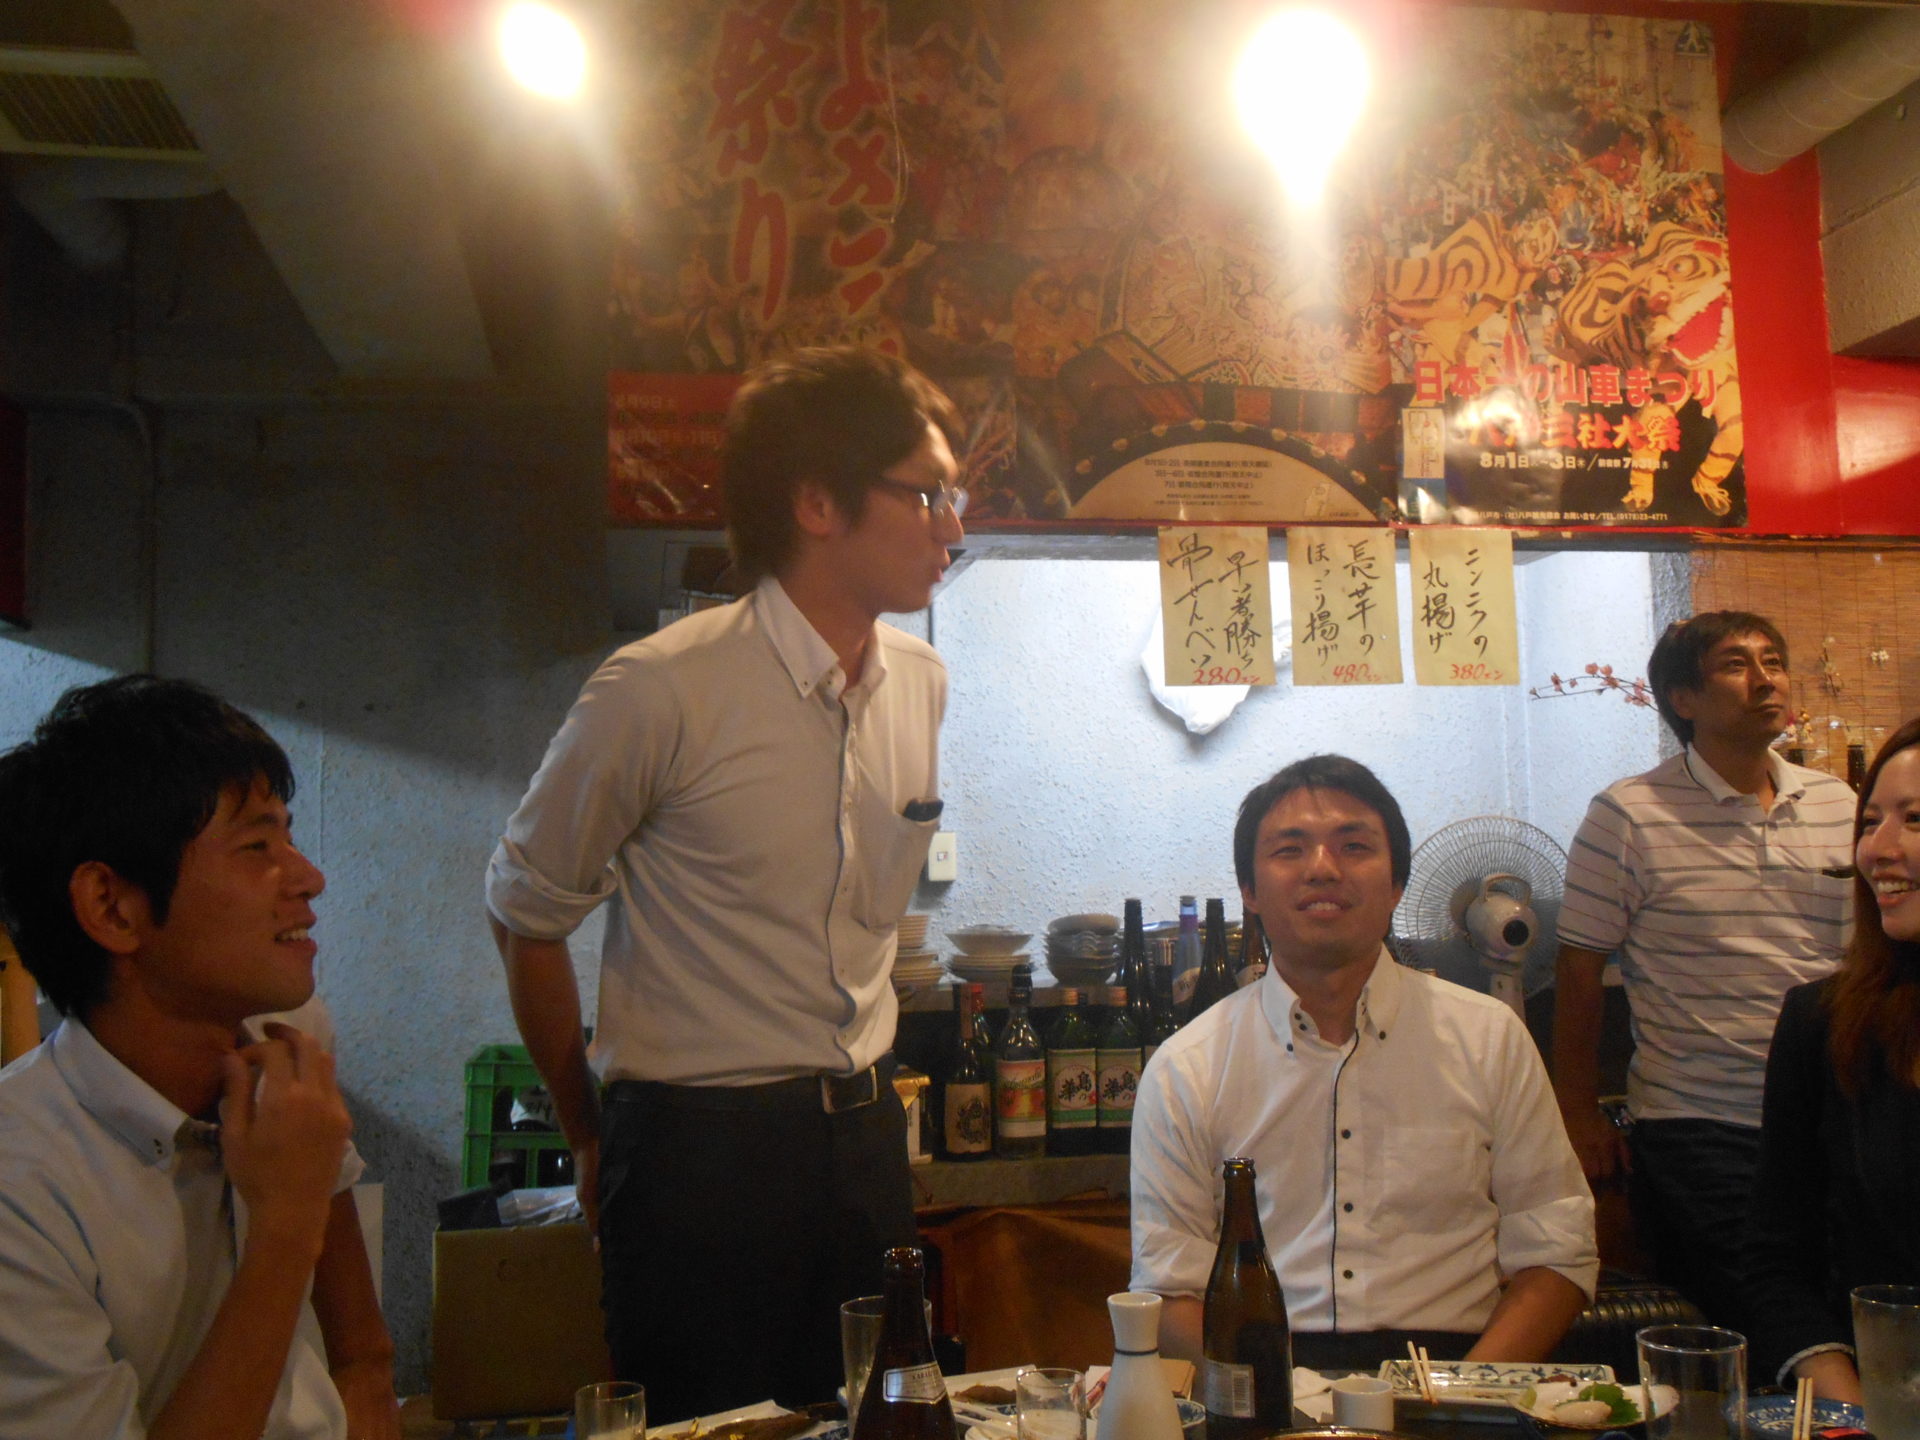 DSCN5641 1920x1440 - 2015年9月14日 AOsuki定例飲み会開催しました。